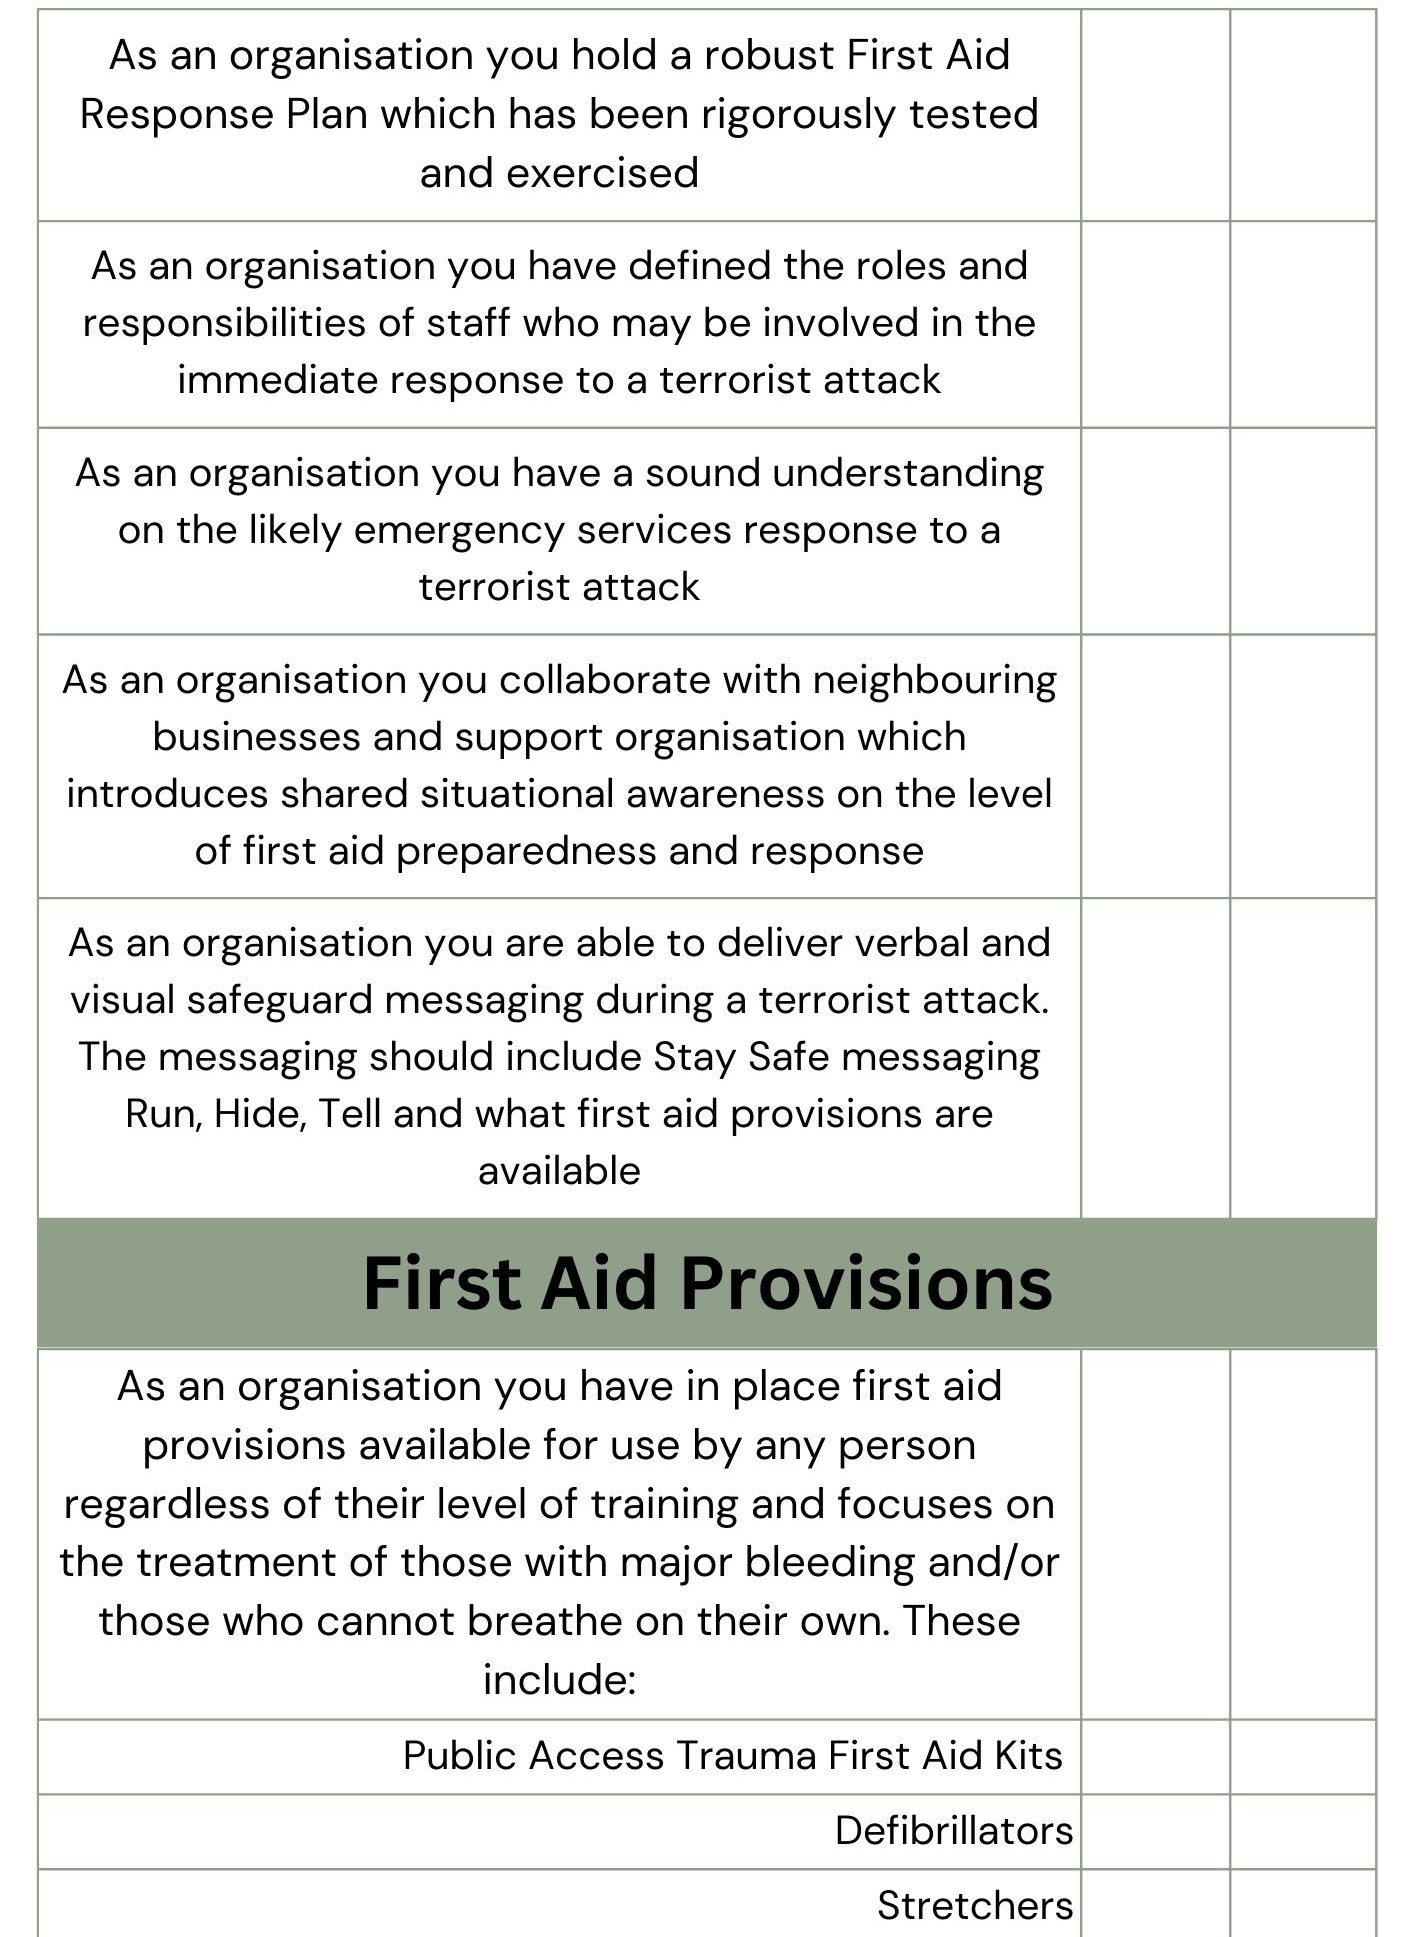 First aid action/checklist